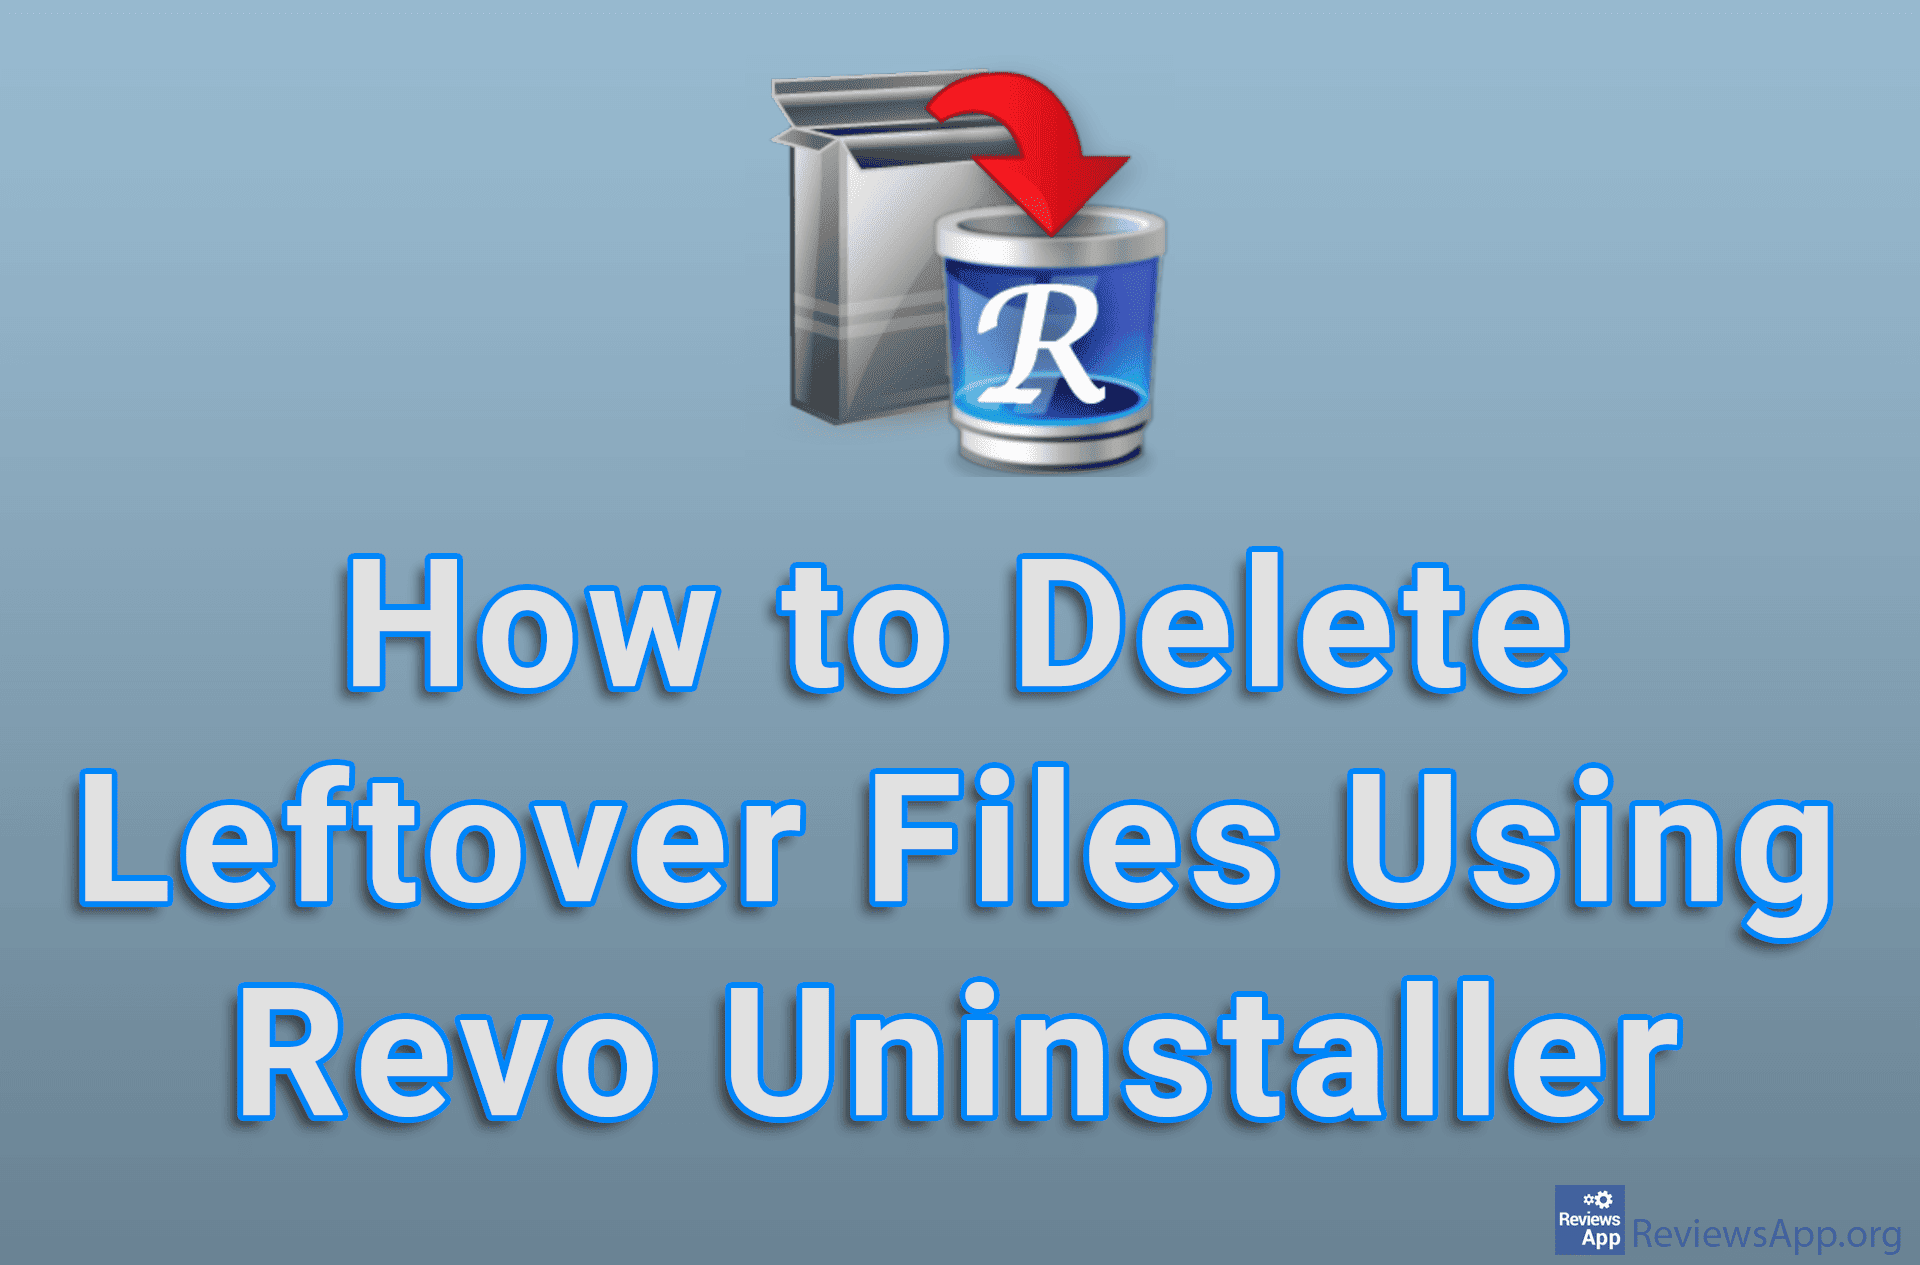 How to Delete Leftover Files Using Revo Uninstaller